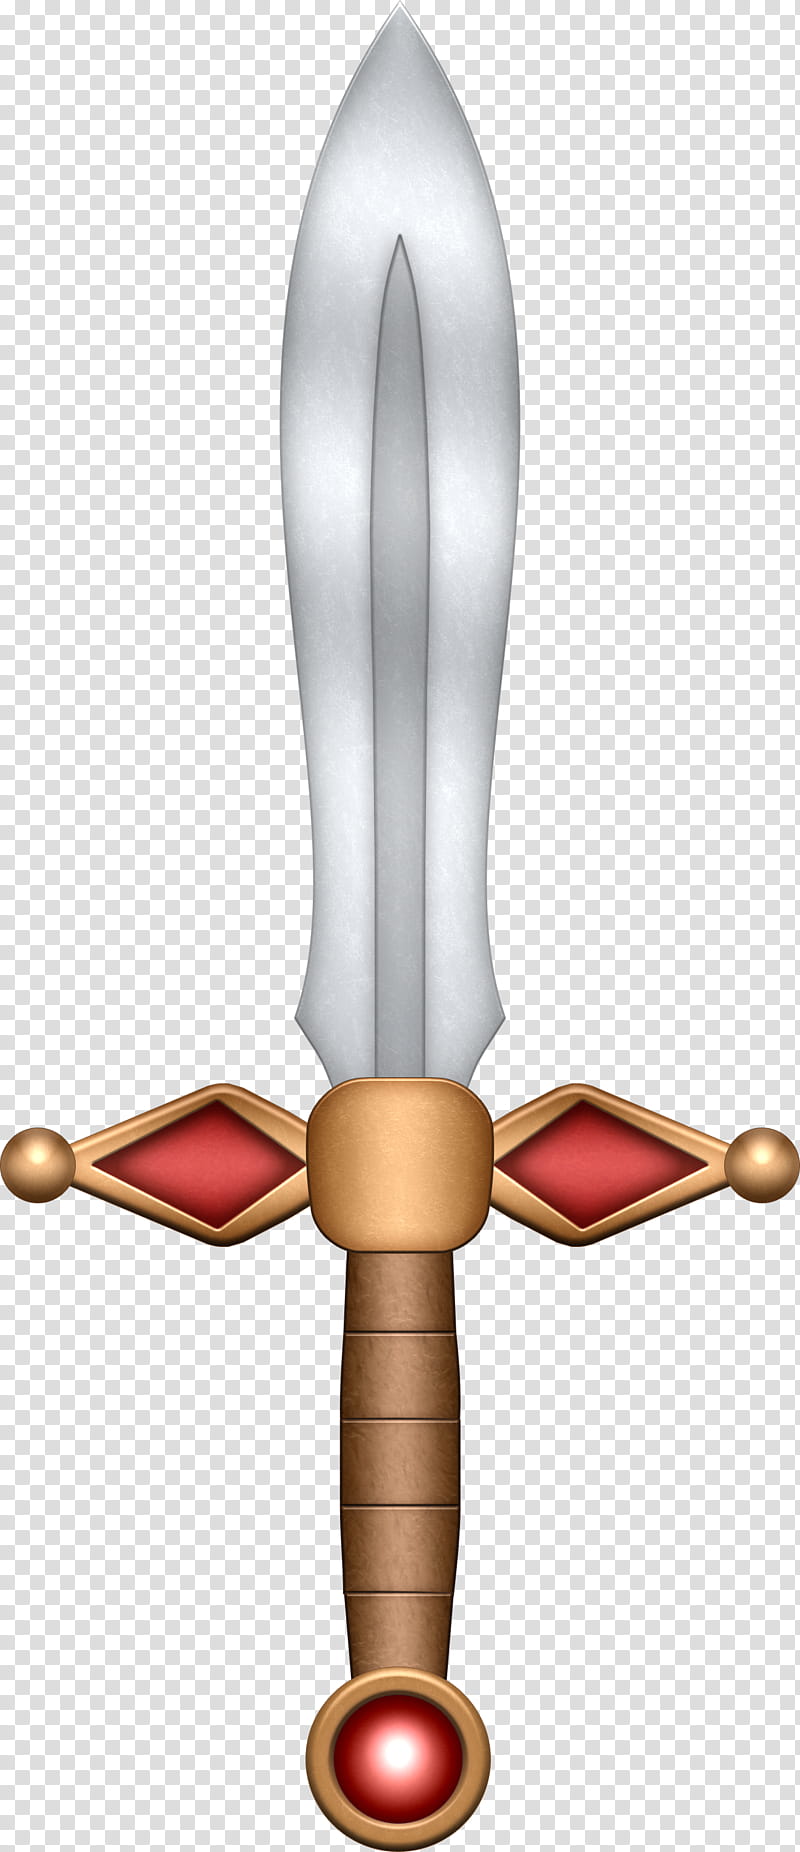 LOZ Cartoon Crissword, The Legend of Zelda sword transparent background PNG clipart